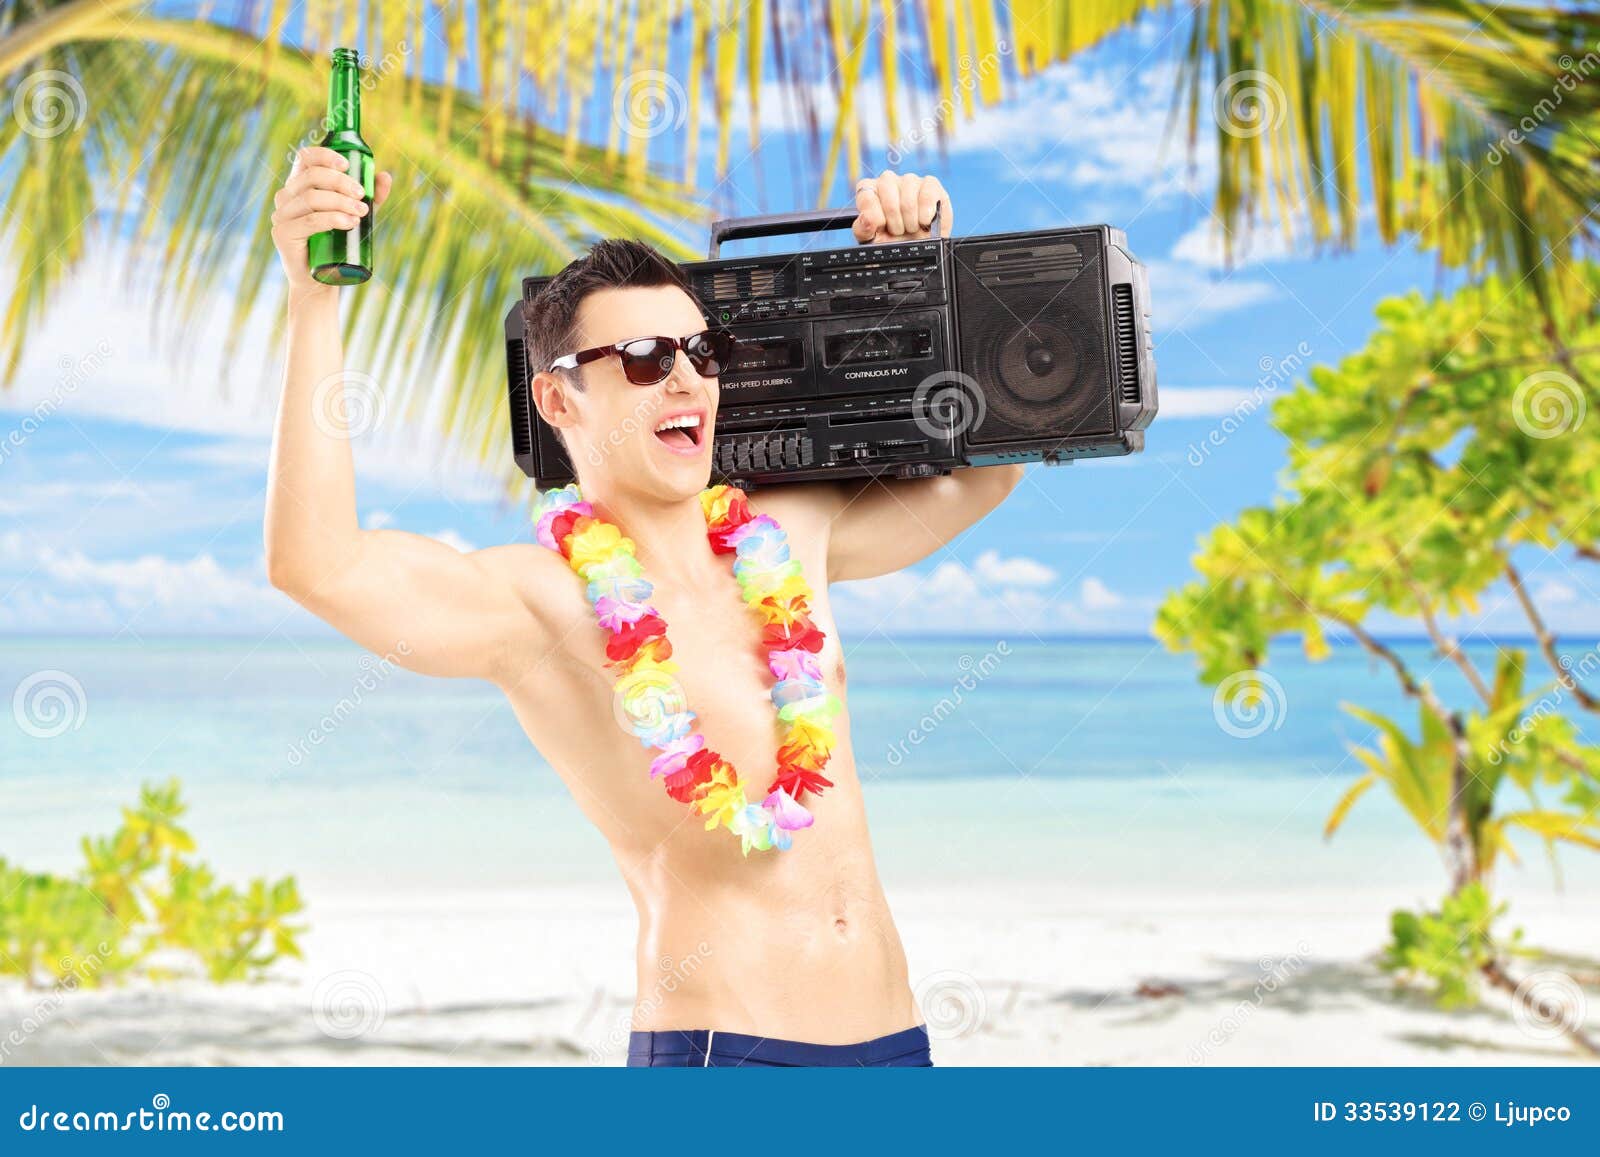 happy-guy-beer-boombox-his-shoulder-gesturing-happin-happiness-tropical-beach-33539122.jpg